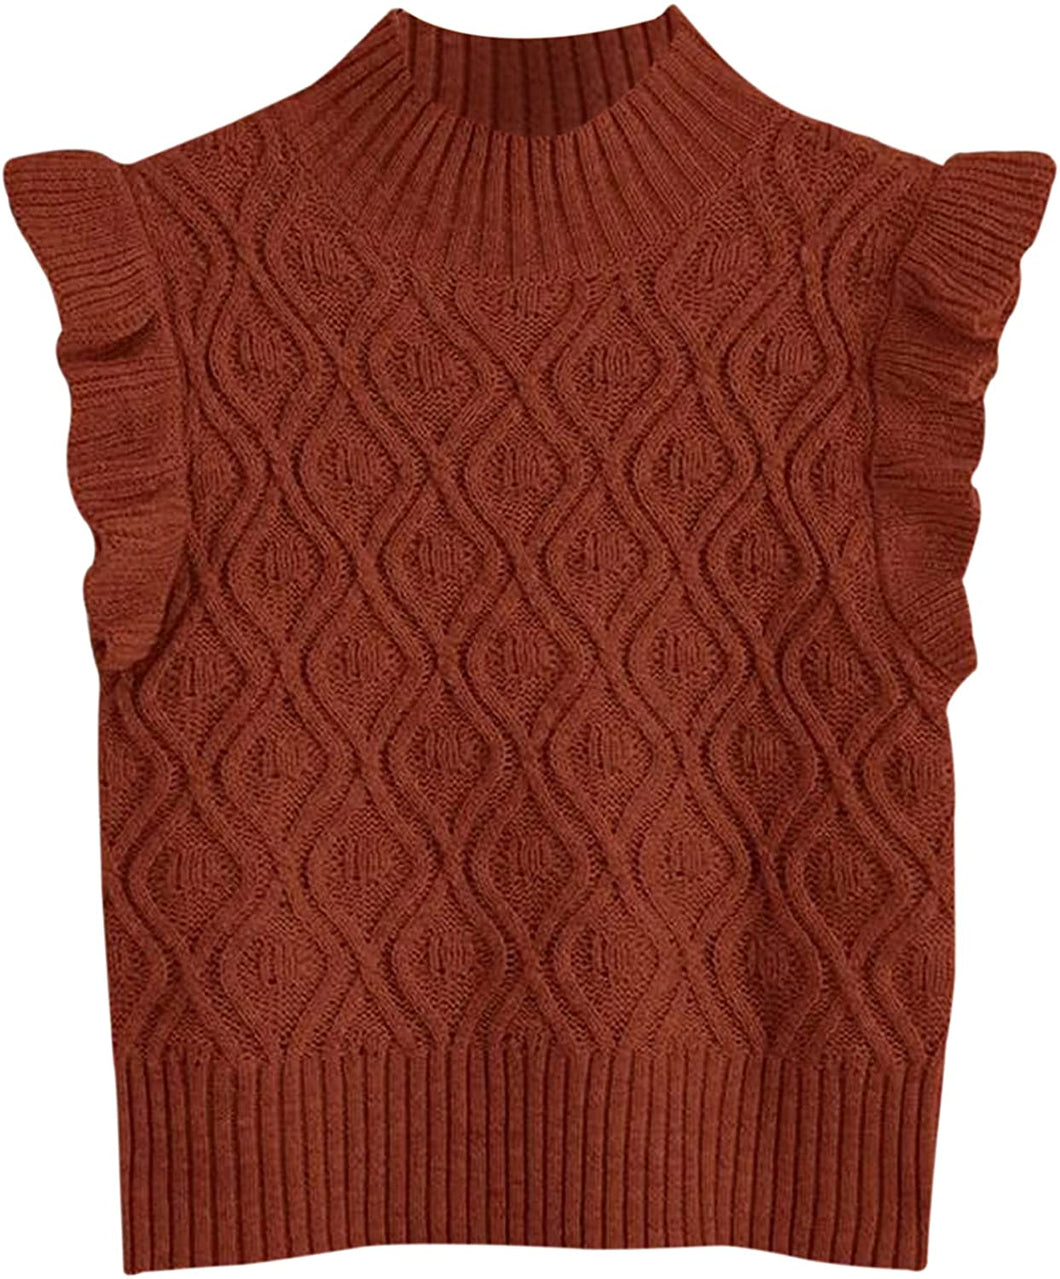 Hunter Green Ruffle Armhole Casual Mock Neck Sweater Vest